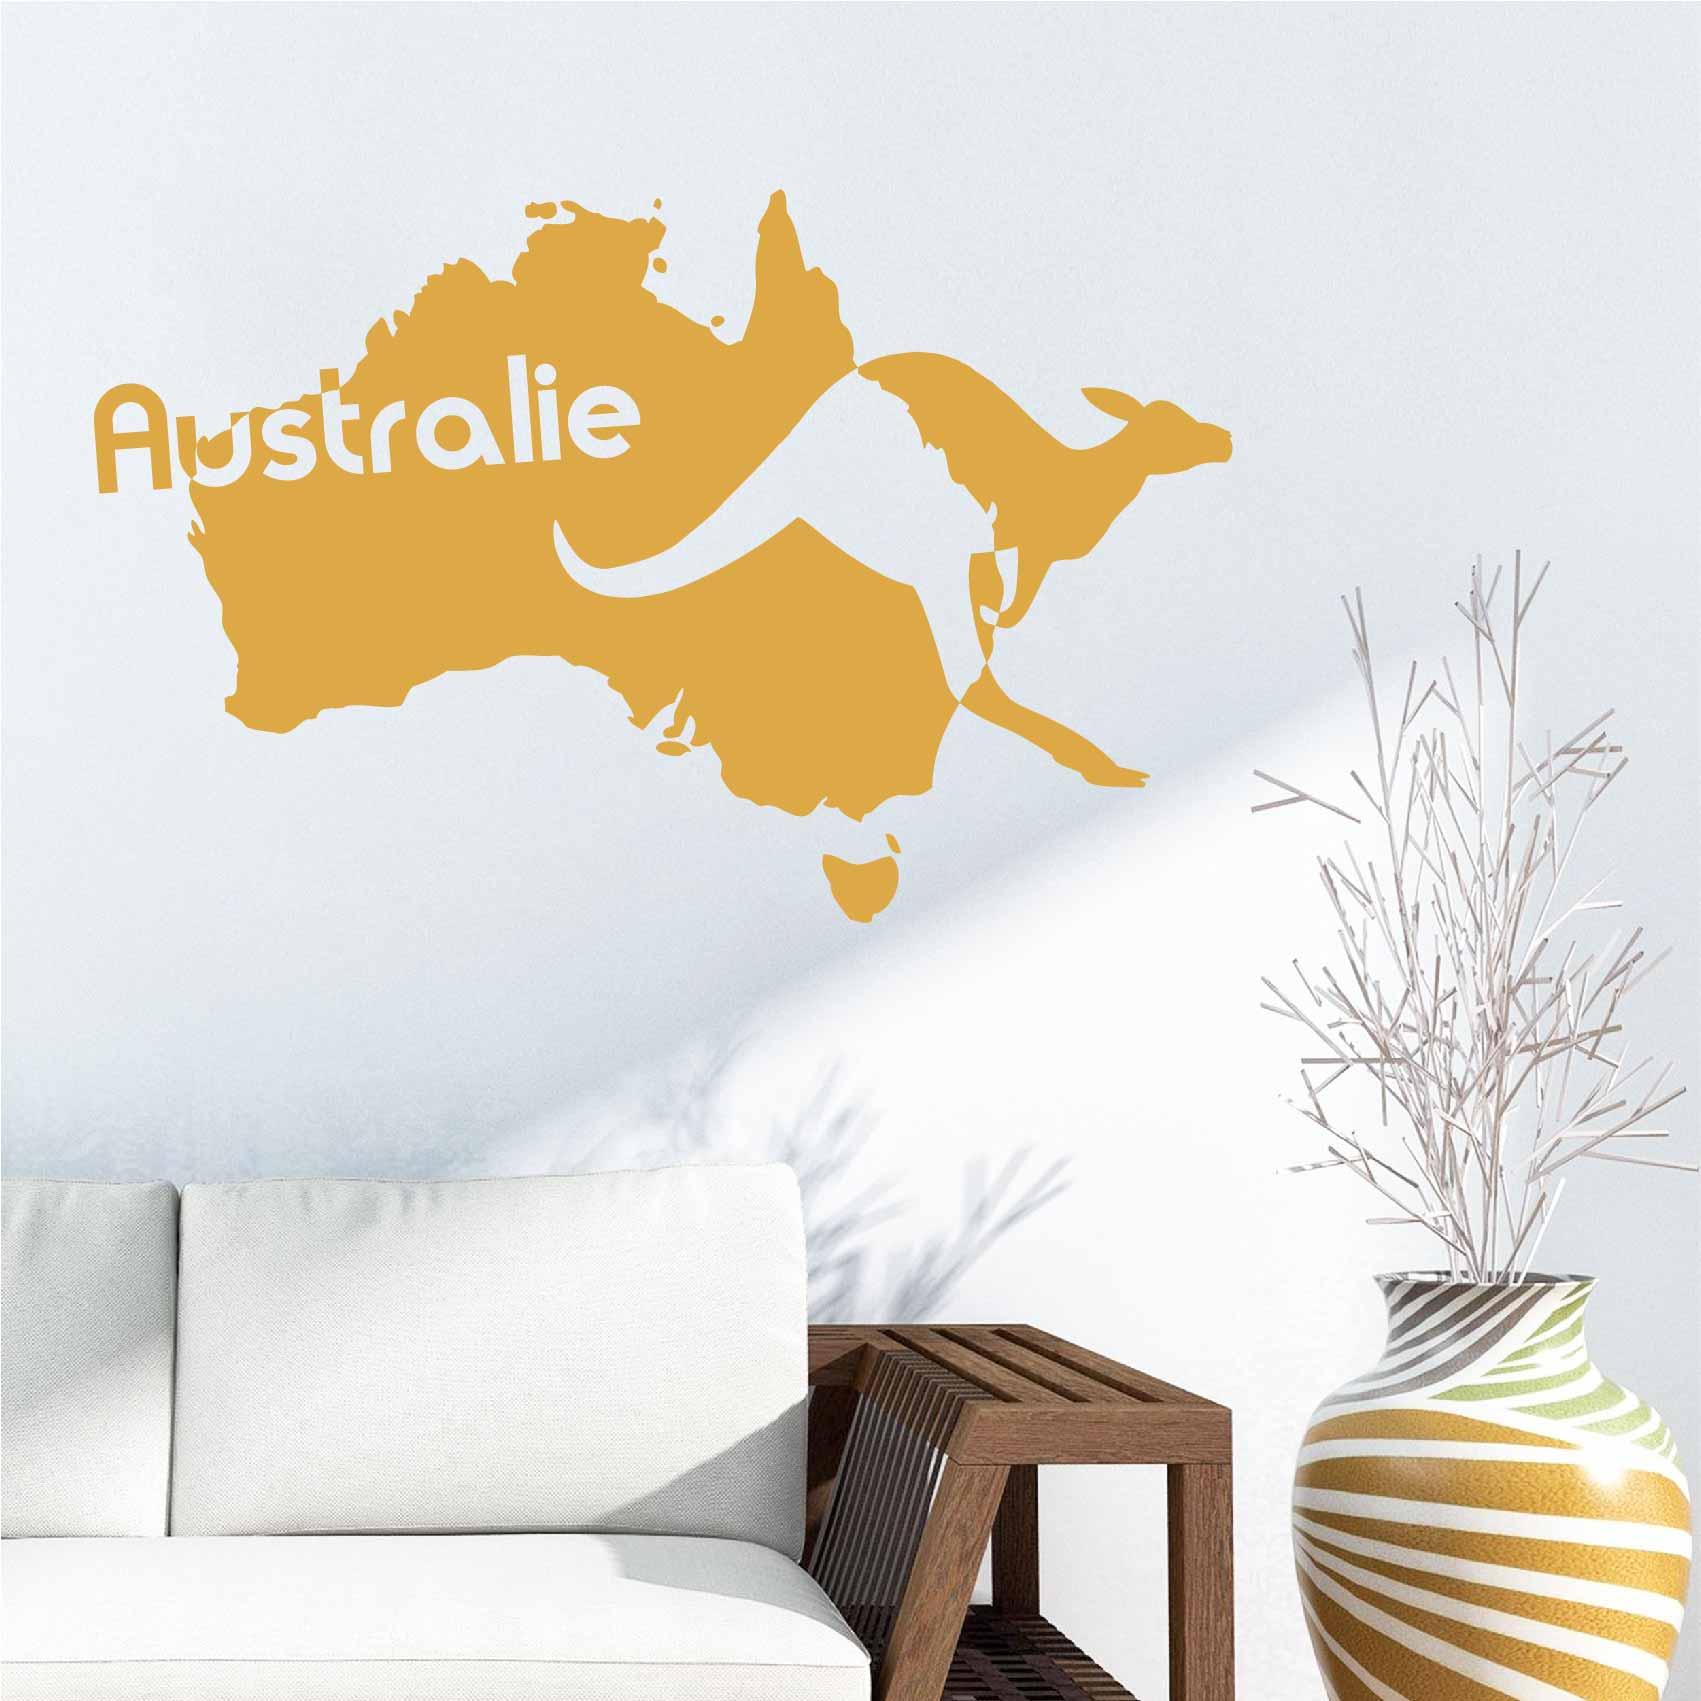 stickers-australie-kangourou-ref1australie-stickers-muraux-australie-autocollant-deco-mur-salon-chambre-sticker-mural-australia